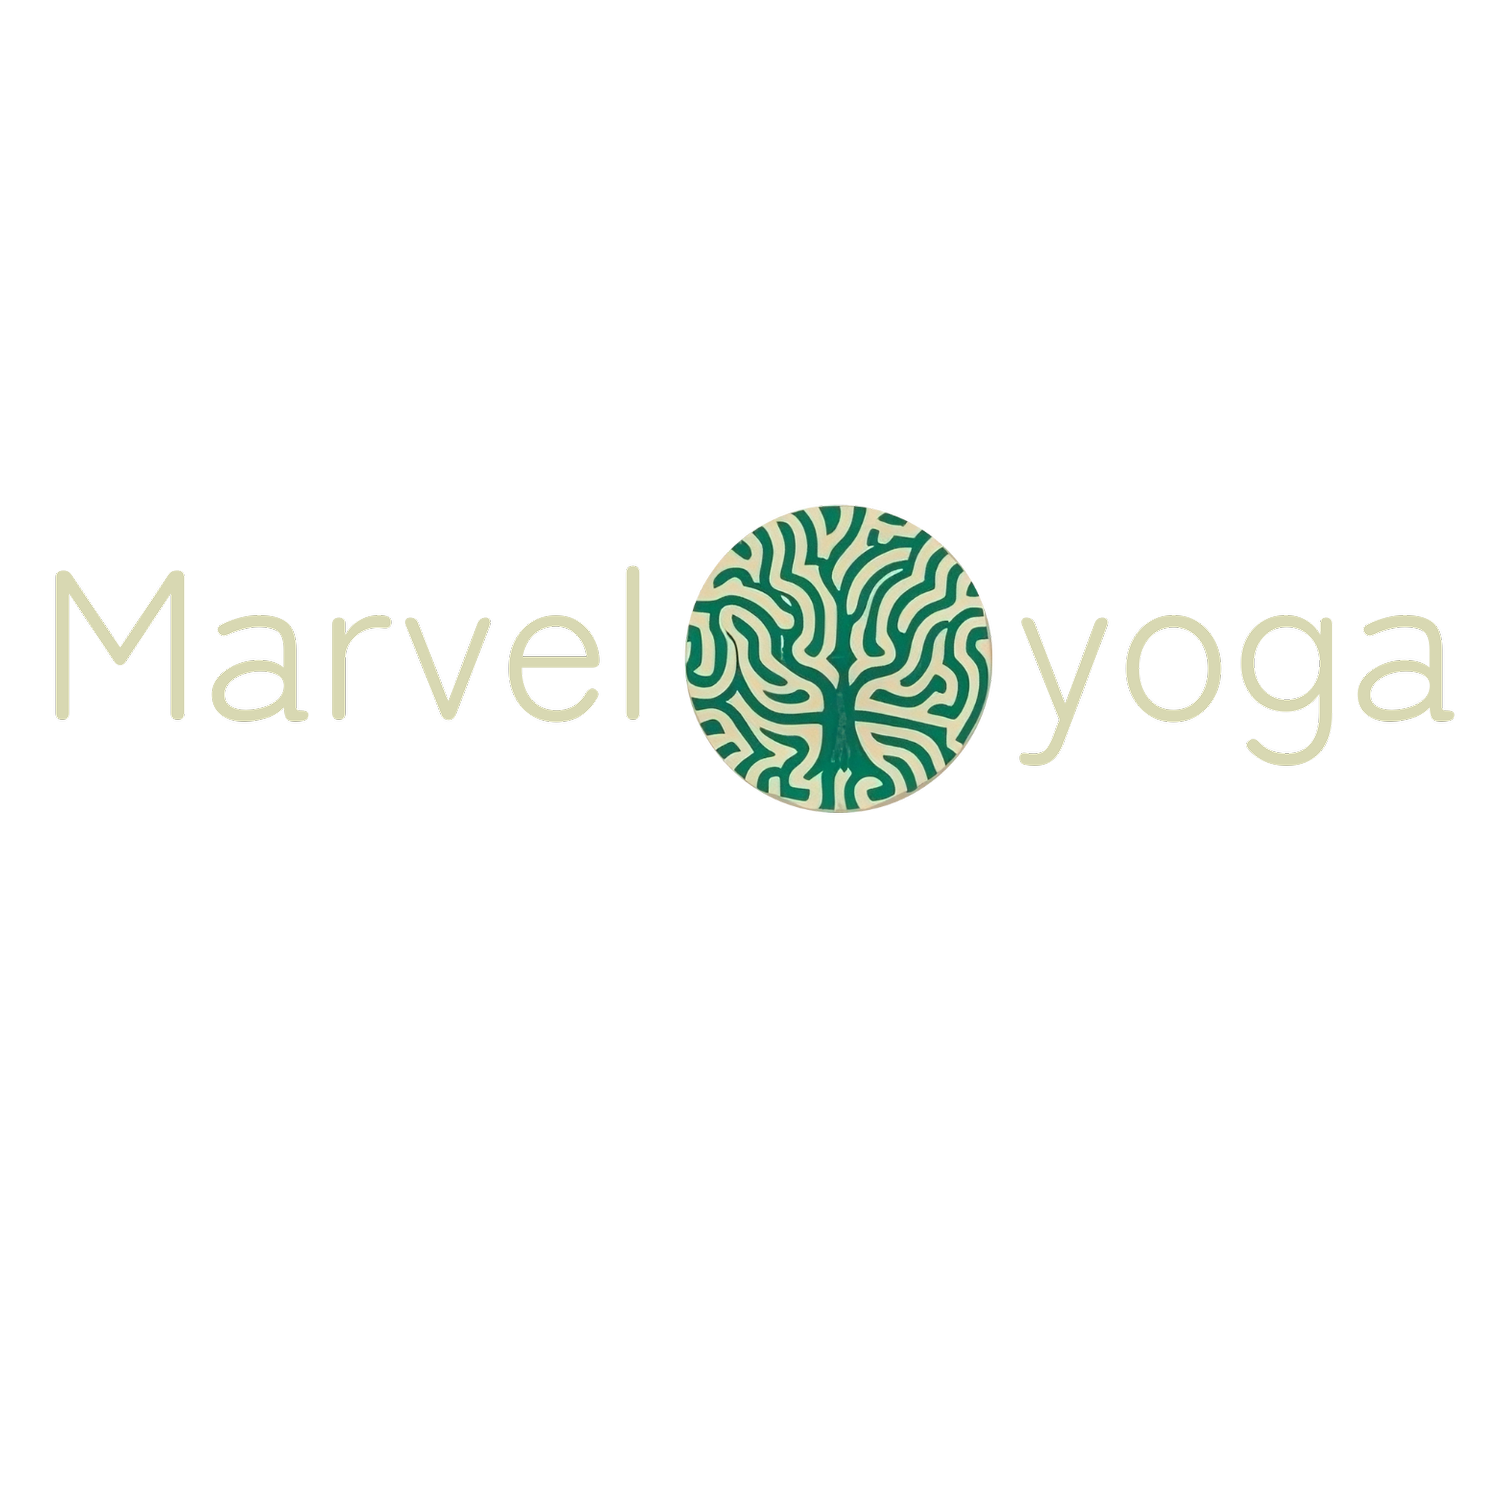 Marvel Yoga